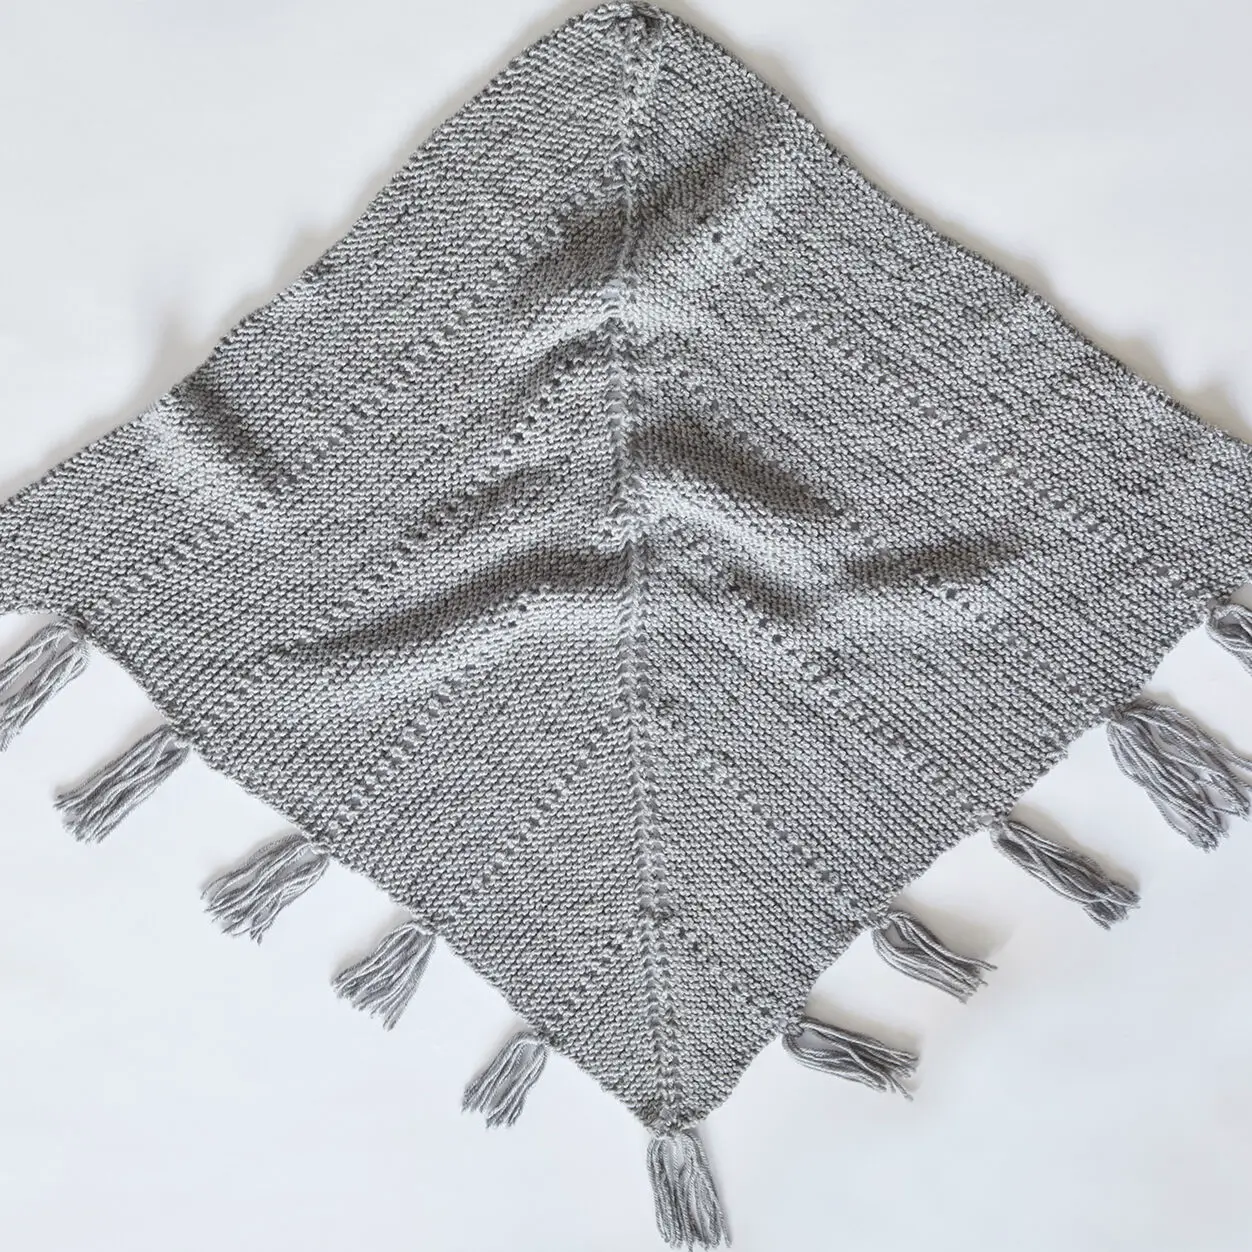 FREE Knitting Pattern: Hoodie Shawl - I Love Yarn Forever